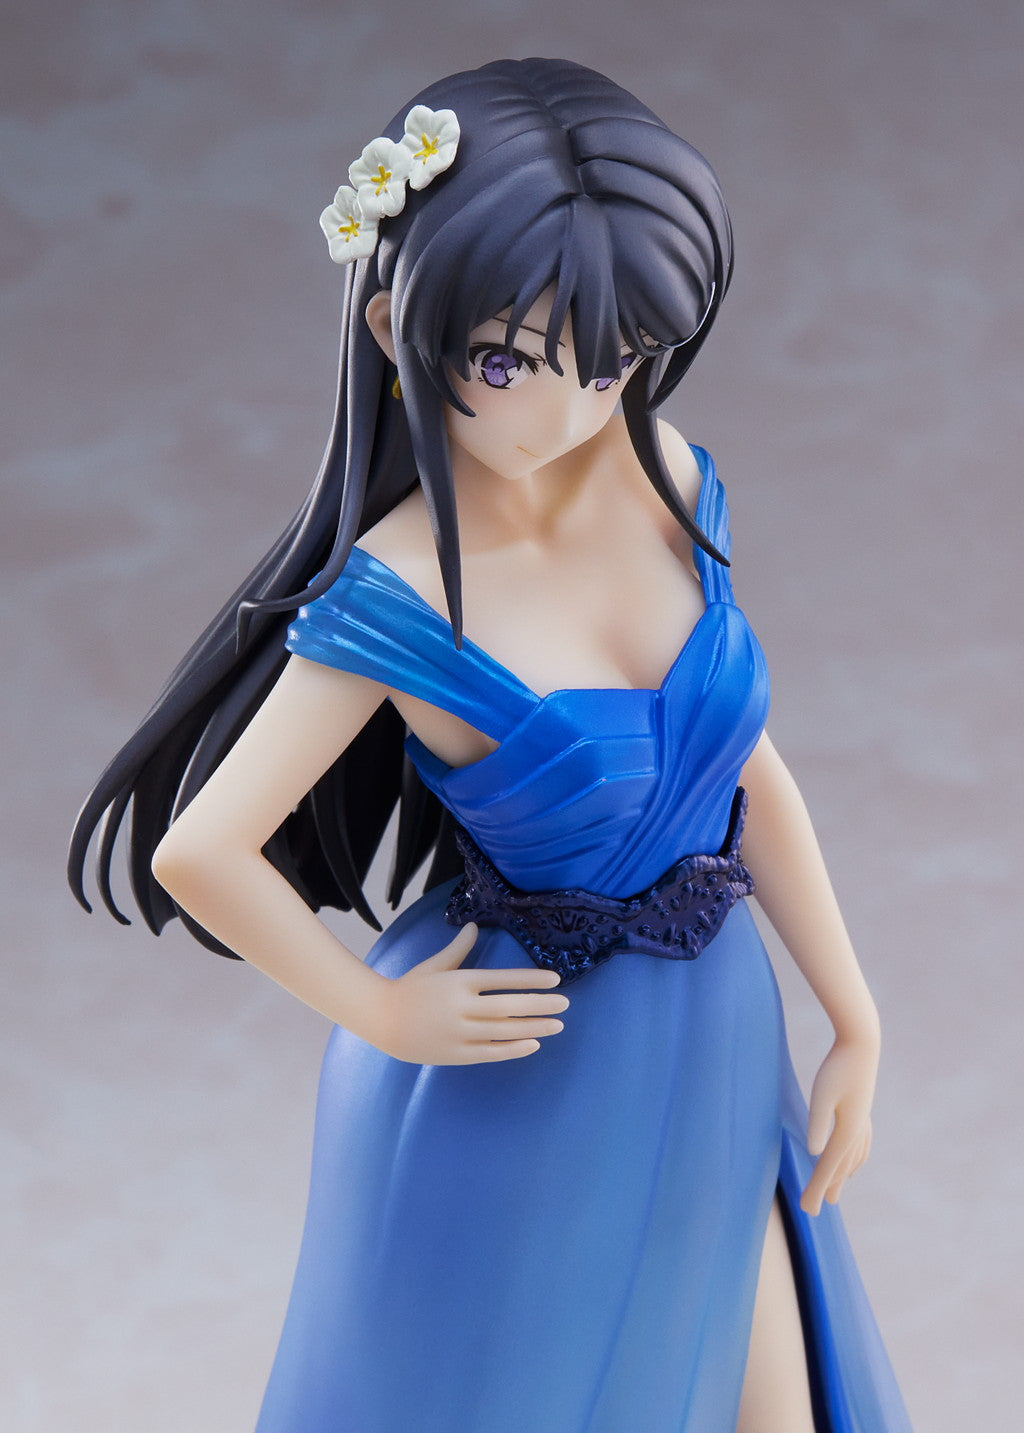 Rascal Does Not Dream of Bunny Girl Senpai - Mai Sakurajima Figure (Blue Wedding Dress Ver.) image count 3